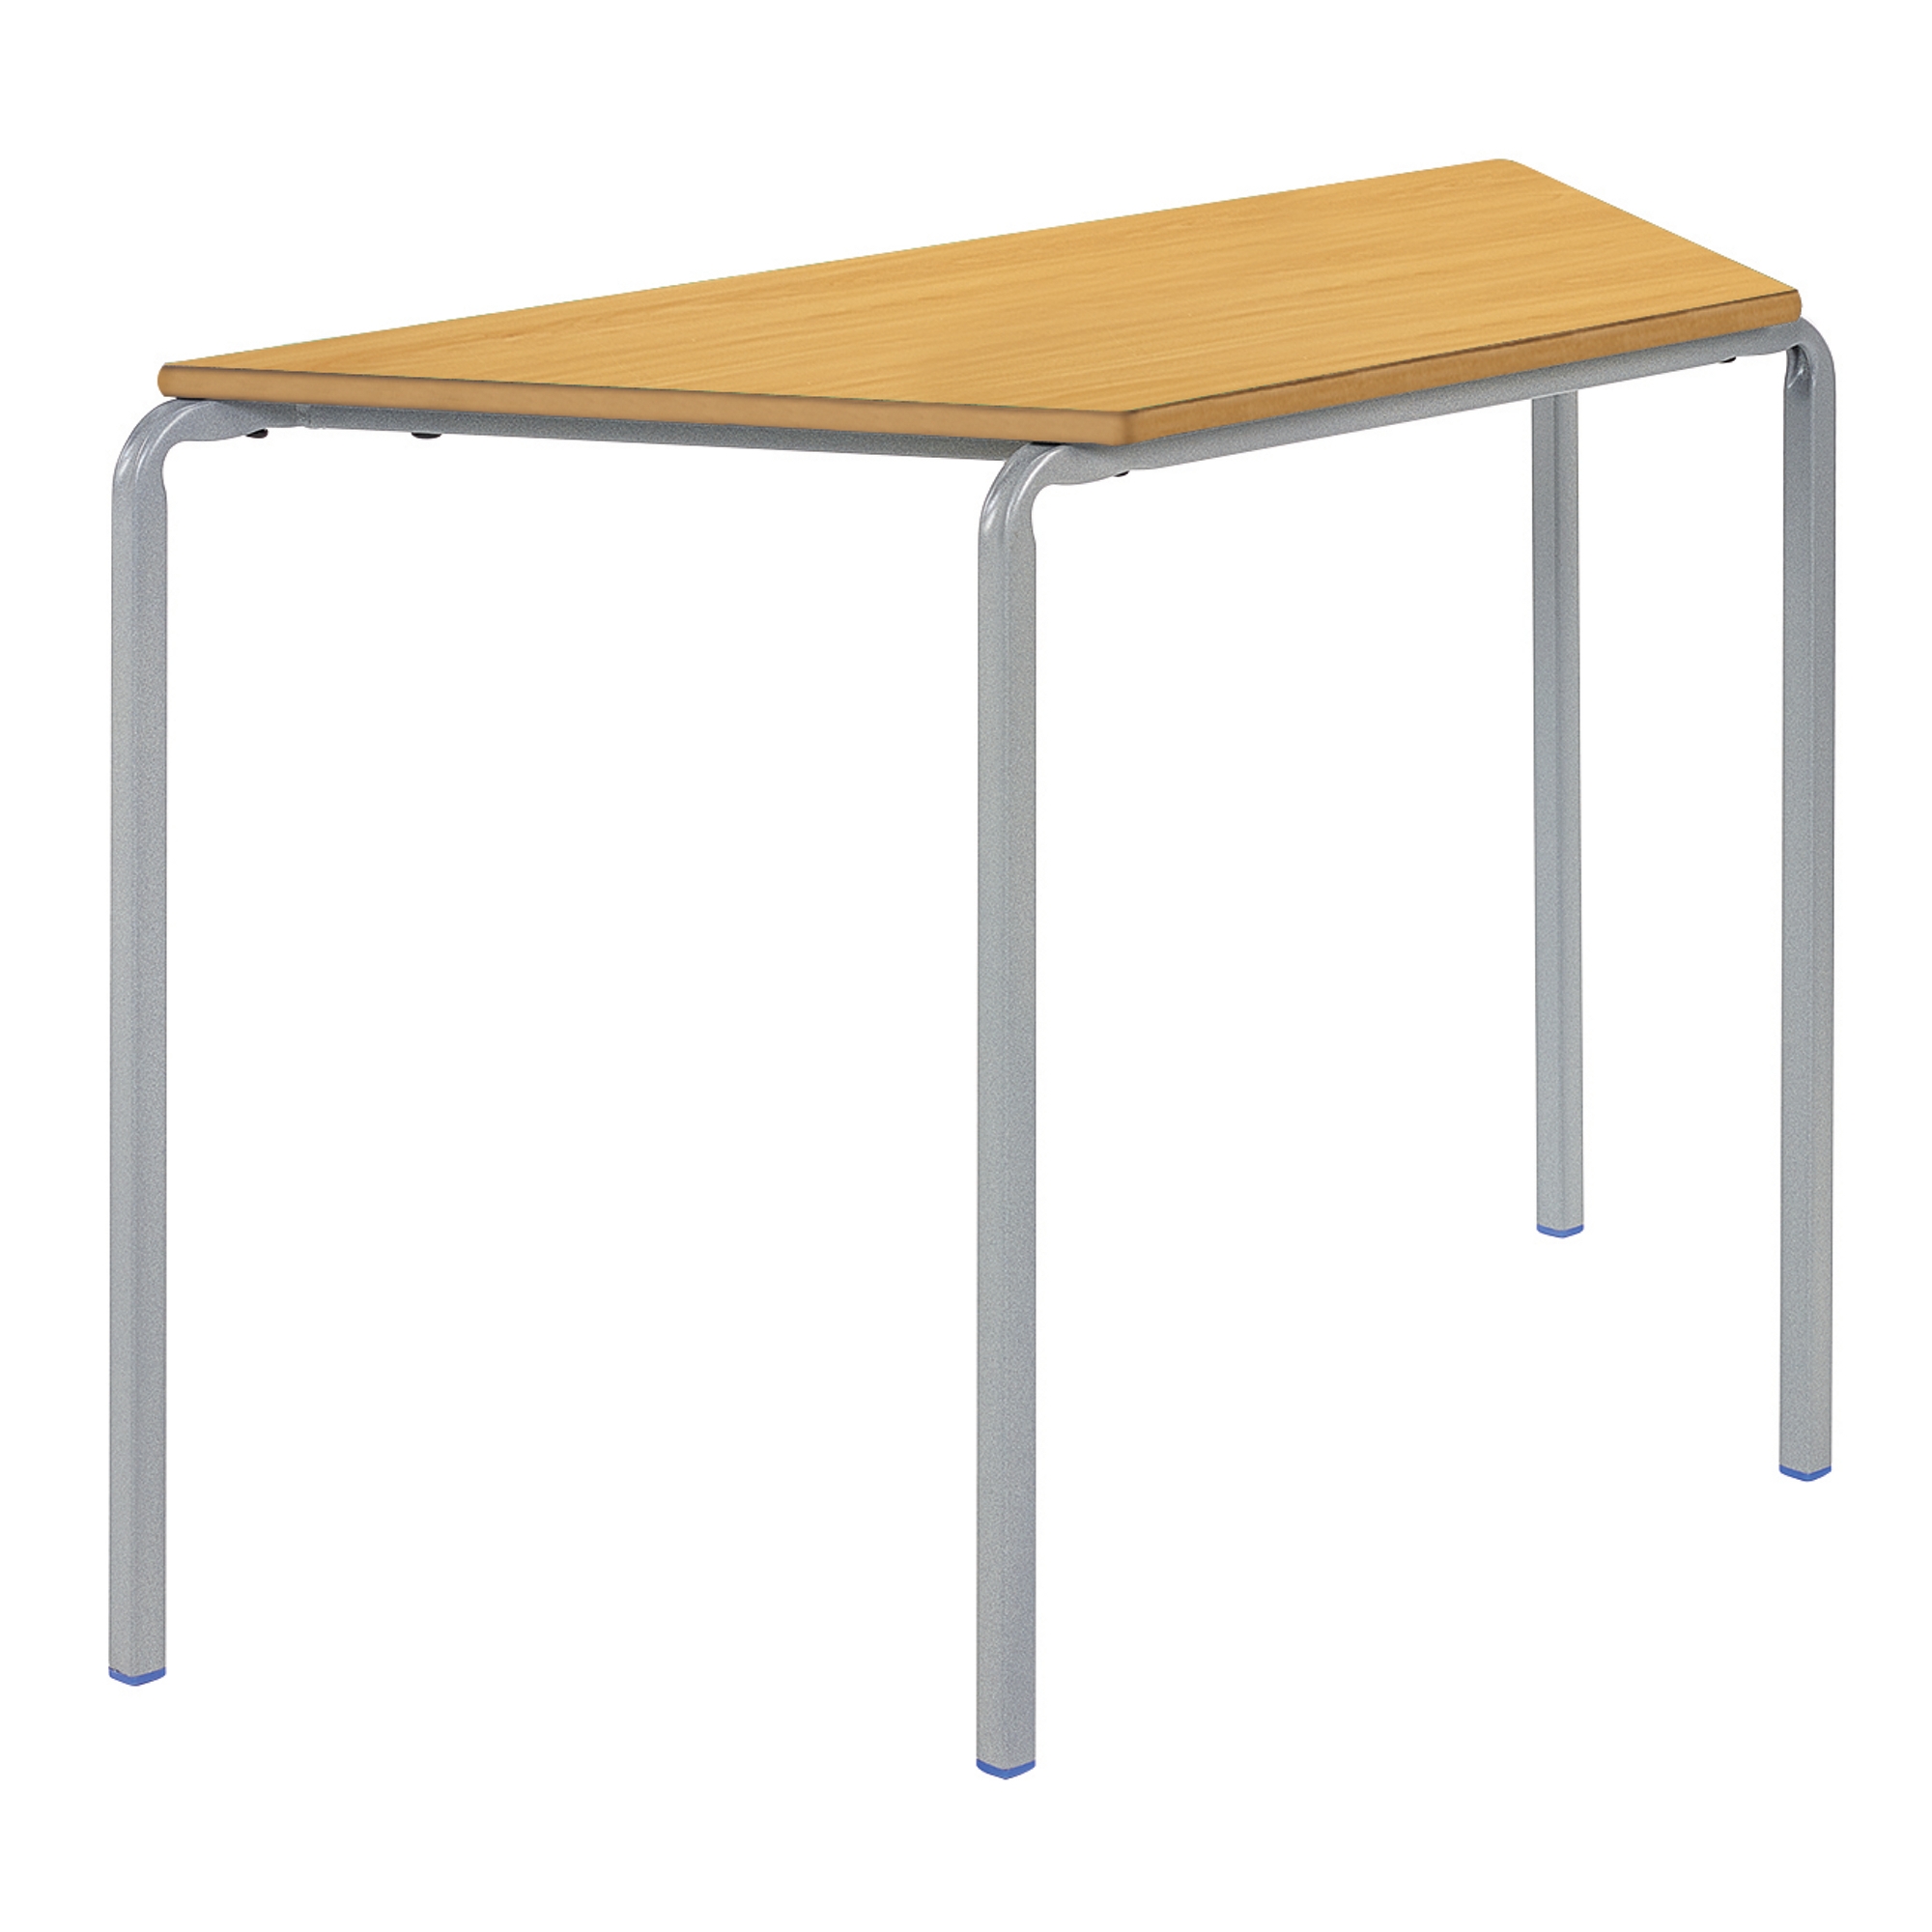 Classmates Trapezoidal Crushed Bent Classroom Table - 1100 x 550 x 710mm - Beech